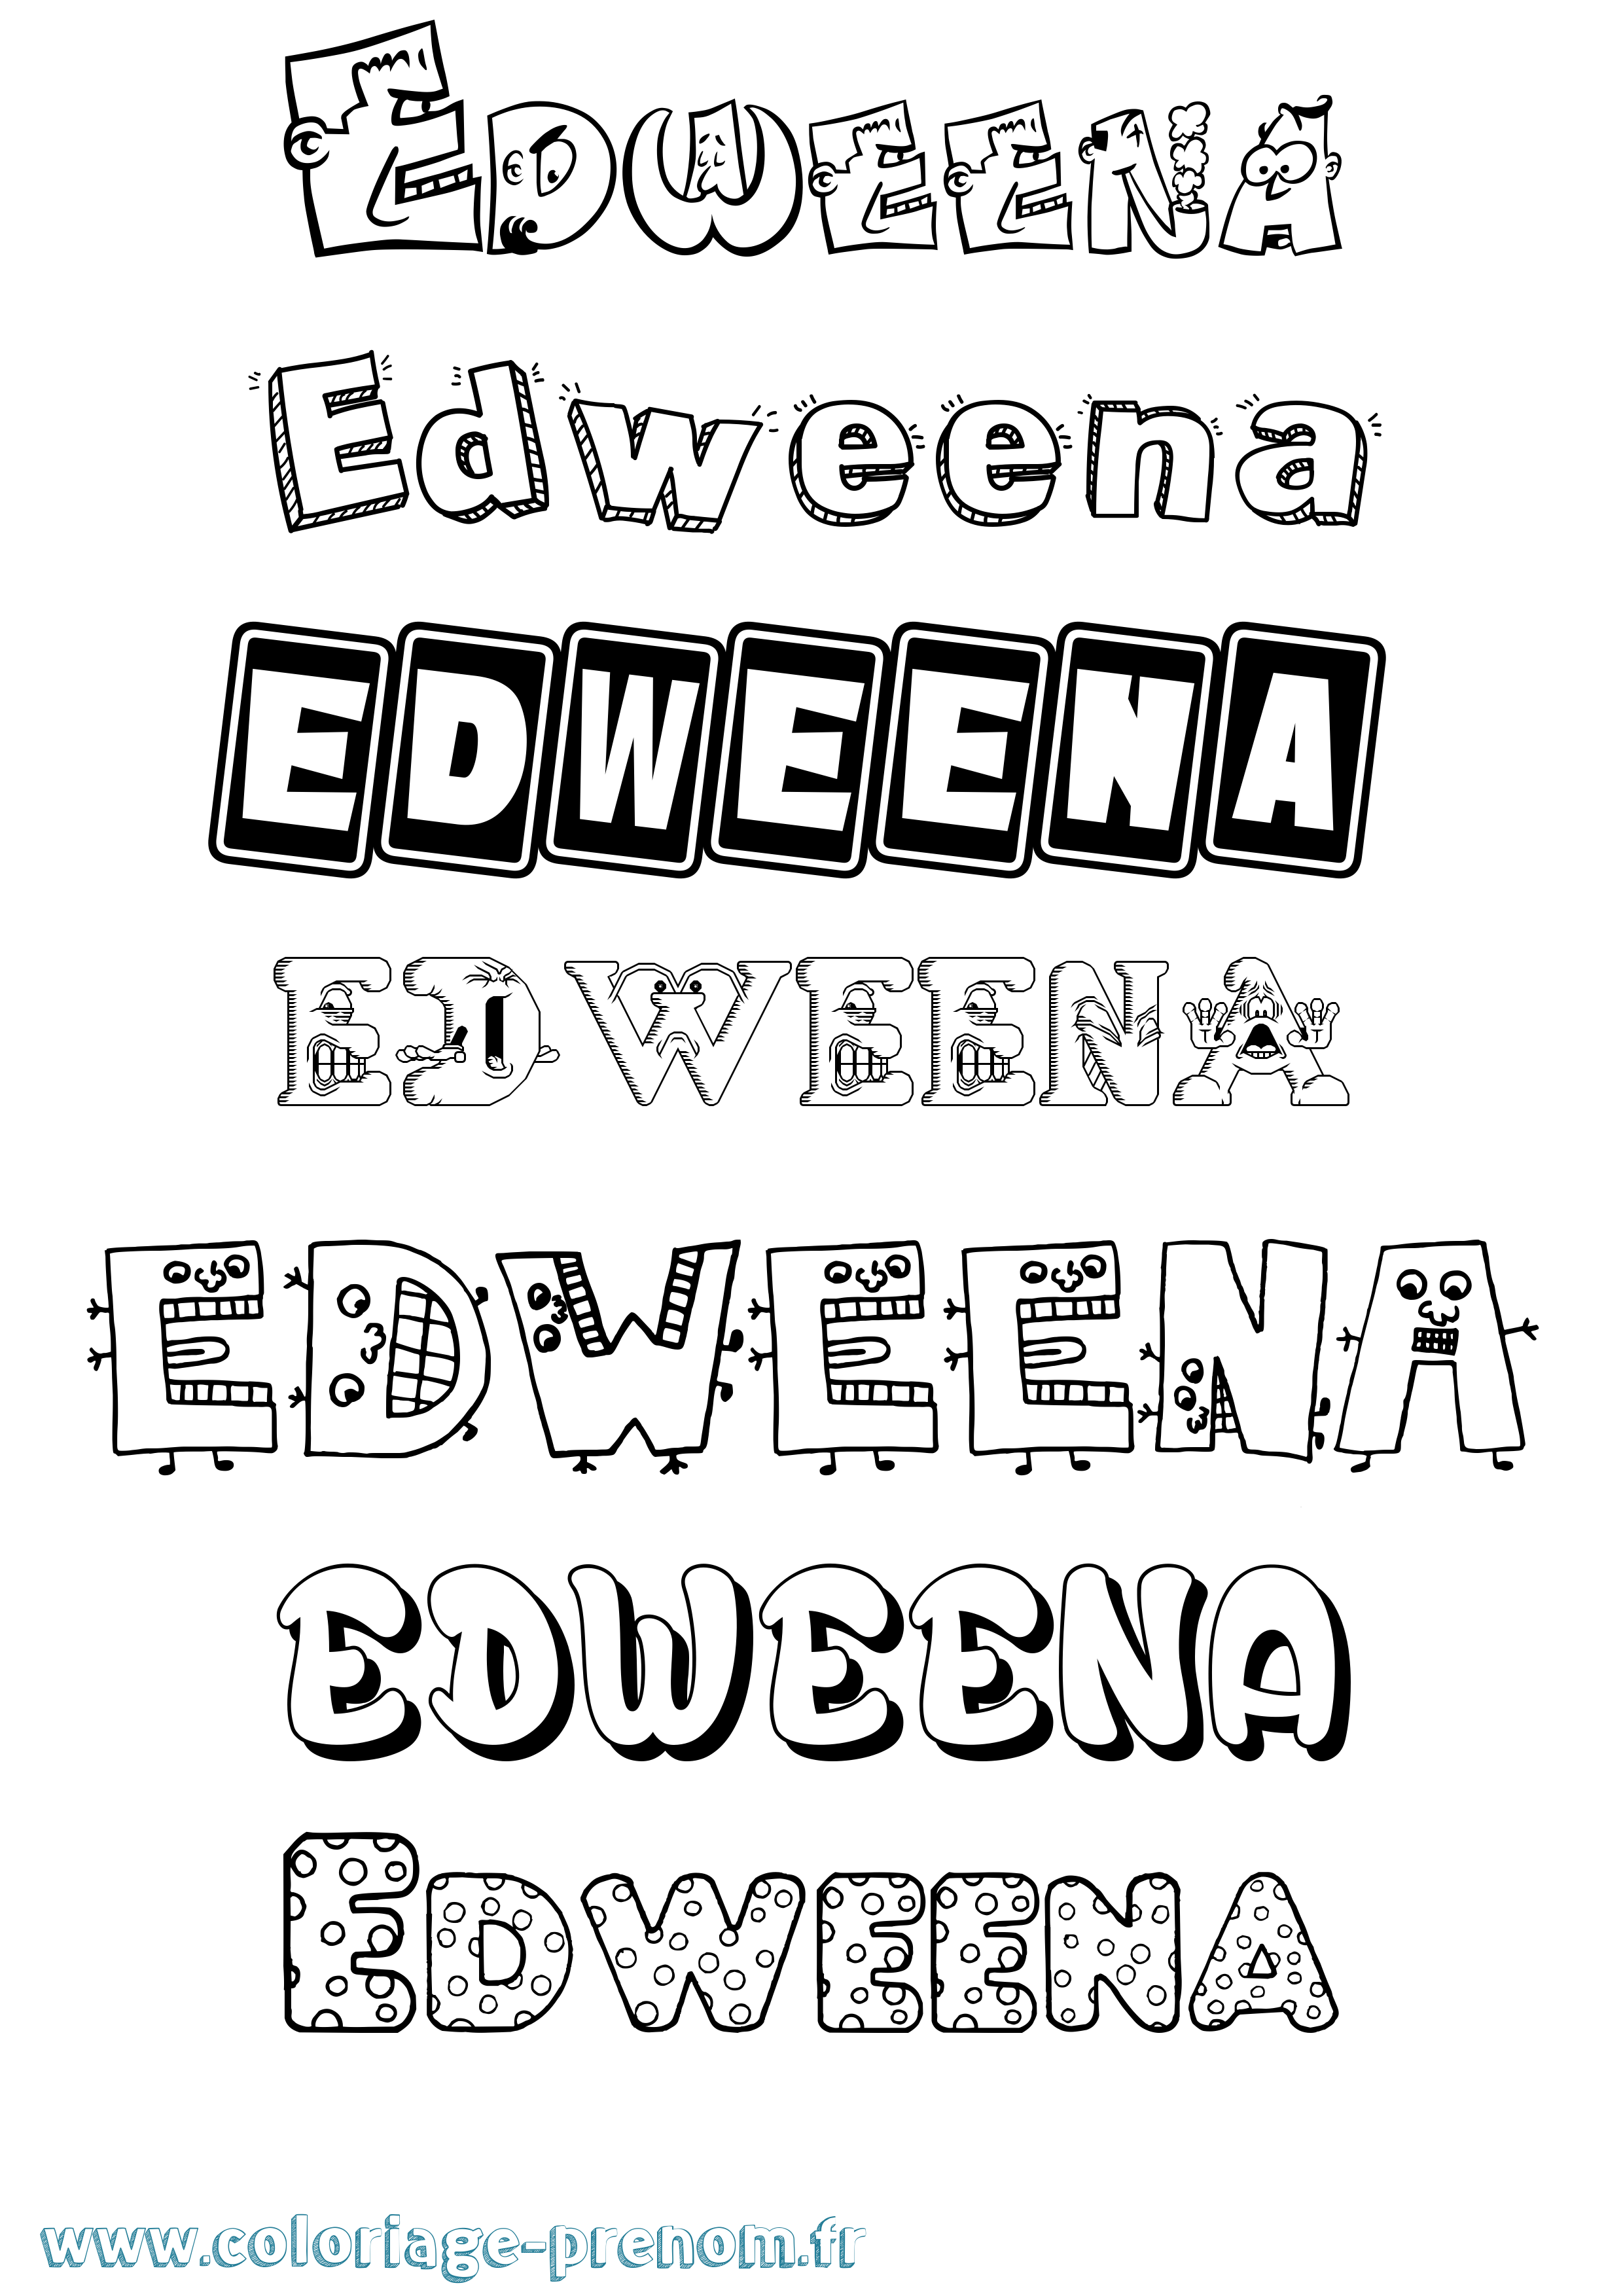 Coloriage prénom Edweena Fun